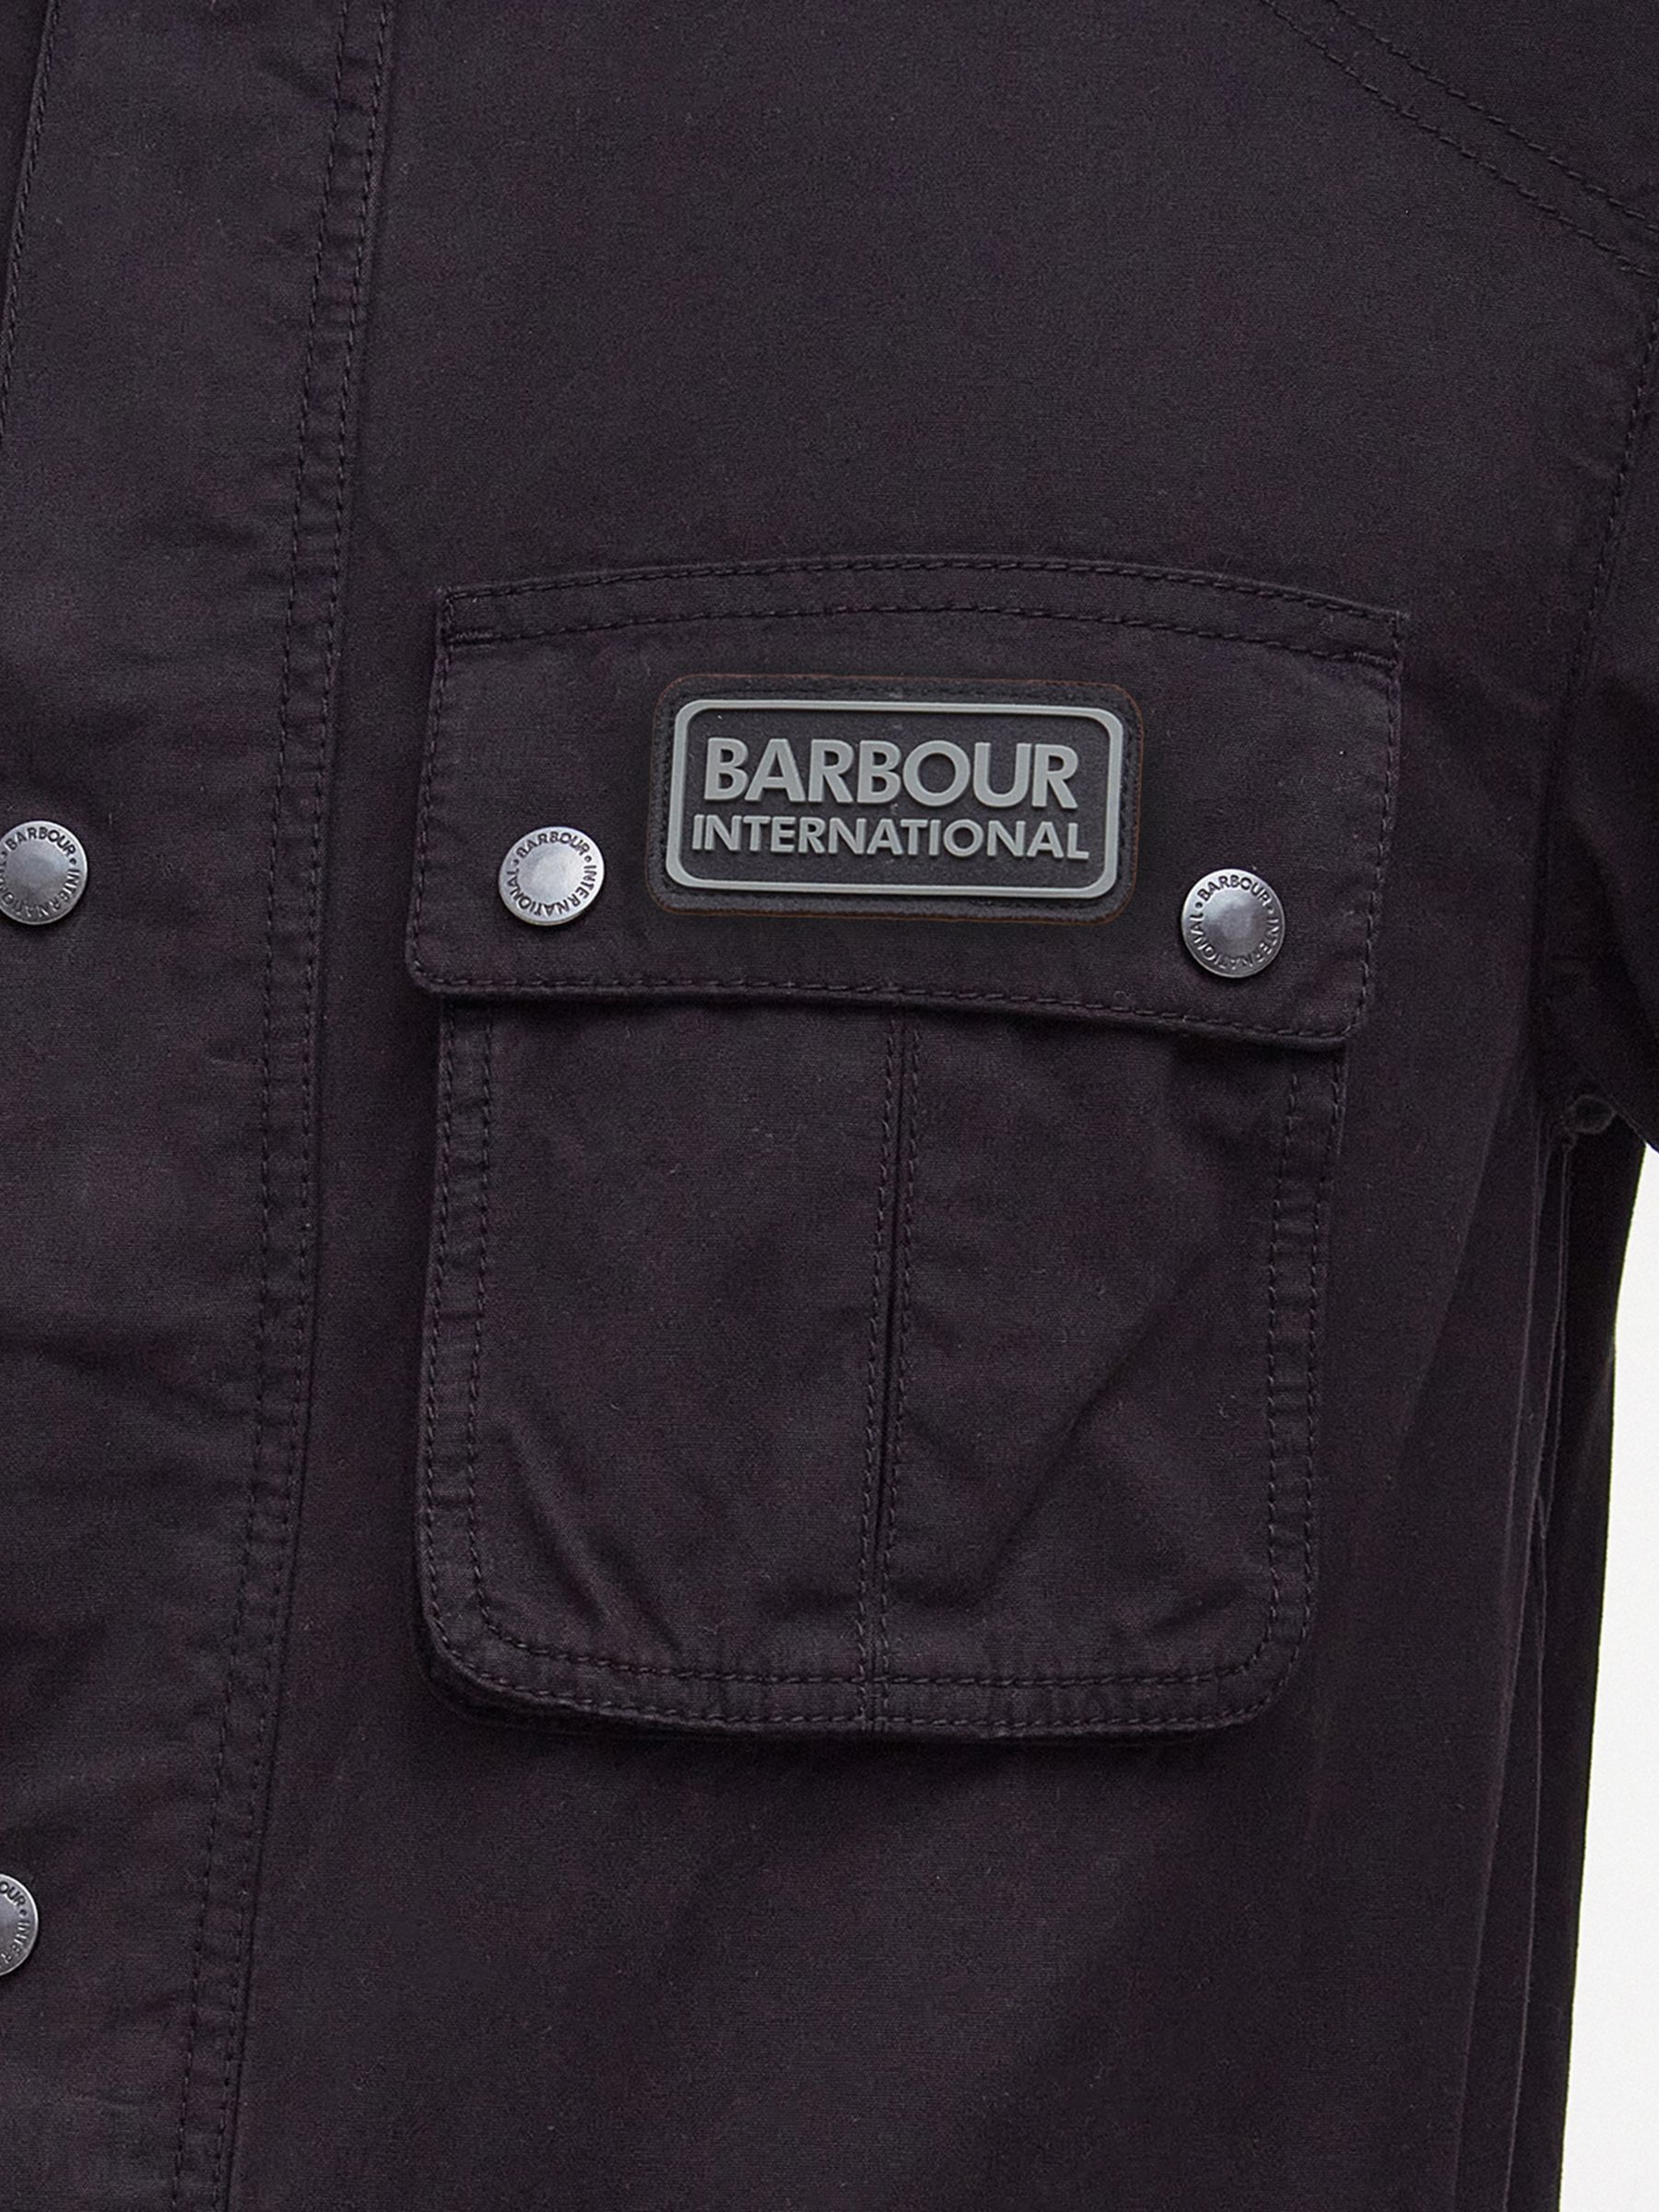 Barbour International Tourer Barwell Casual Jacket, Black at John Lewis ...